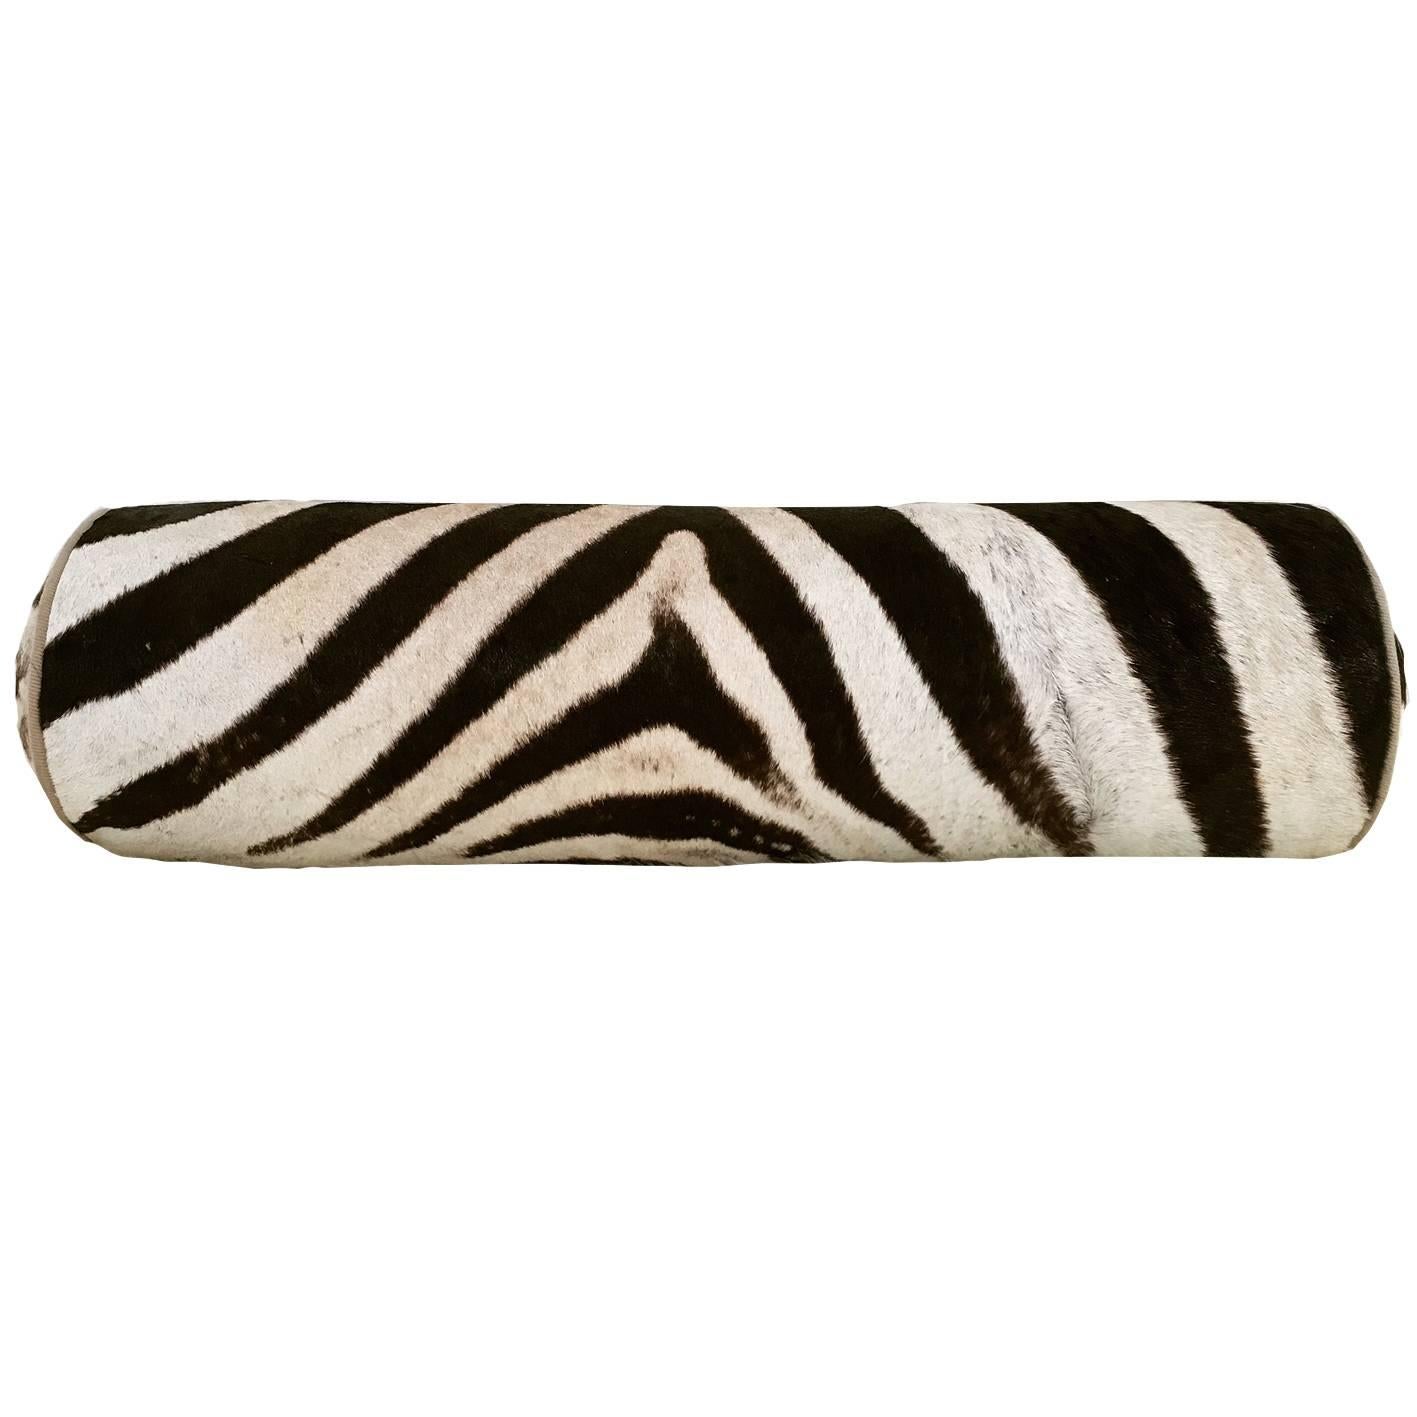 Zebra Hide Bolster Pillow, No. 113